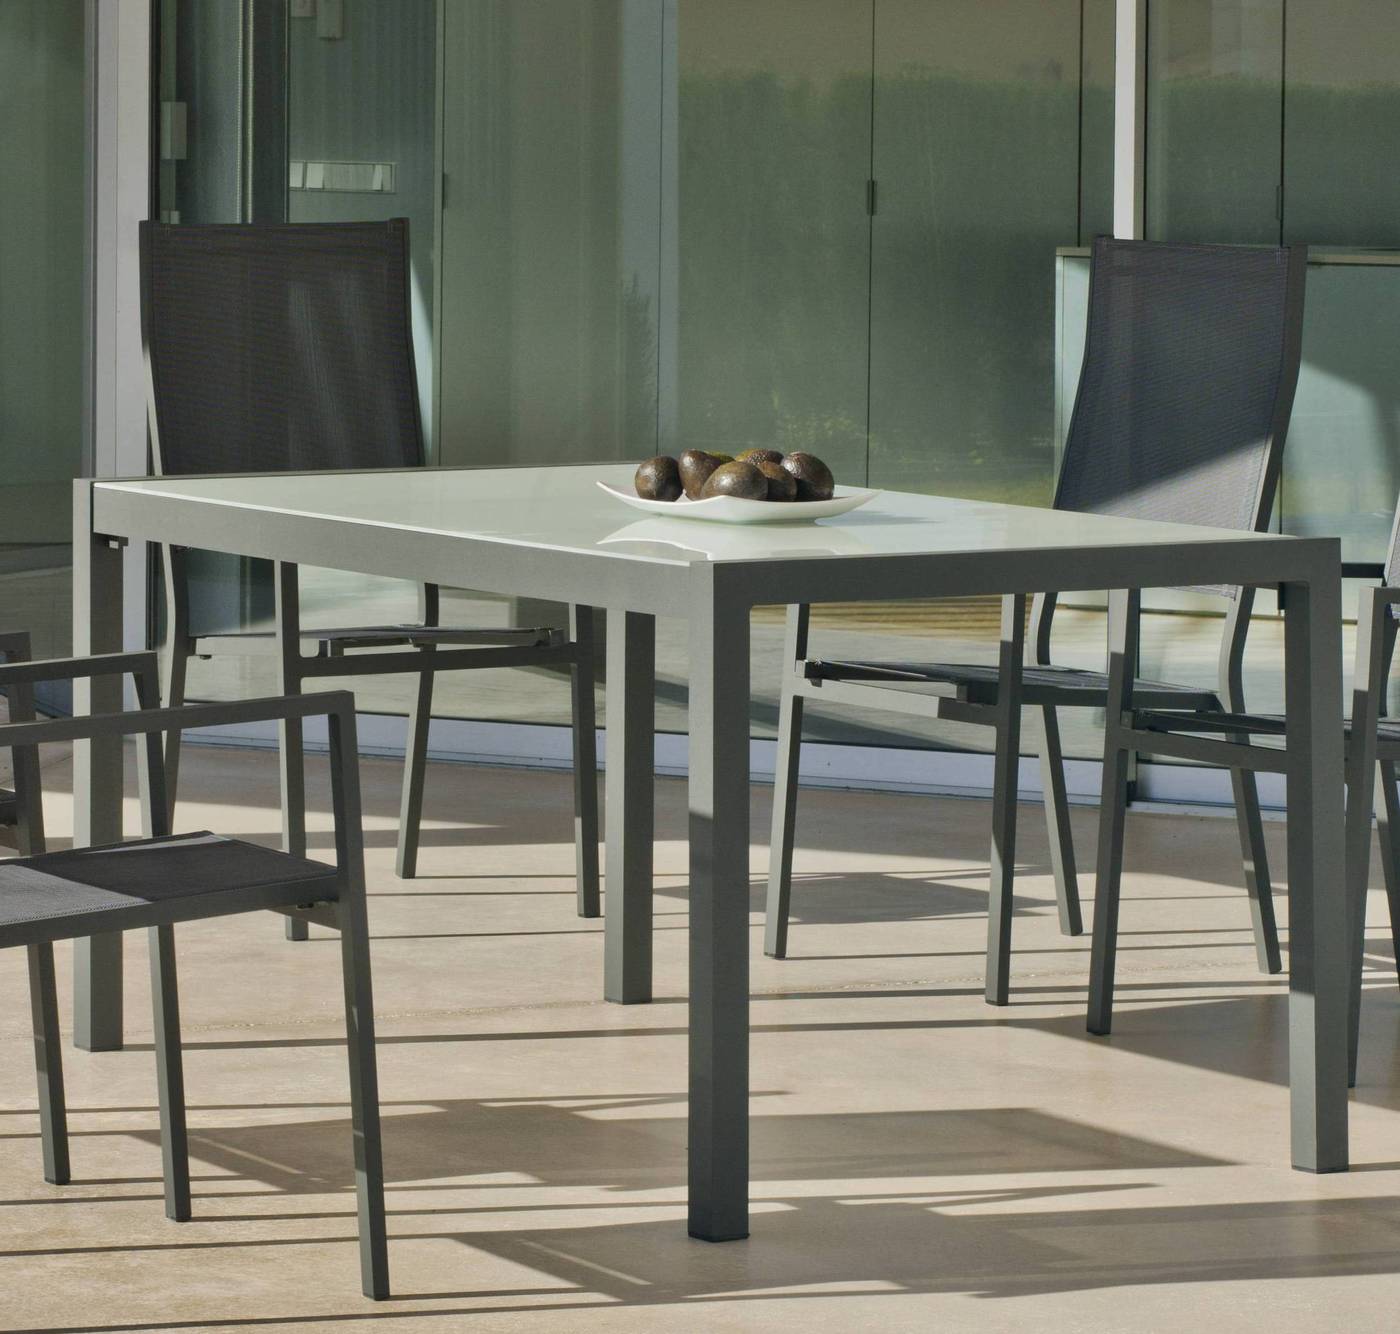 Set Aluminio Córcega-Janeiro 160-6 - Conjunto aluminio para jardín: Mesa rectangular 160 cm + 6 sillones altos de textilen. Disponible en color blanco, plata y antracita.